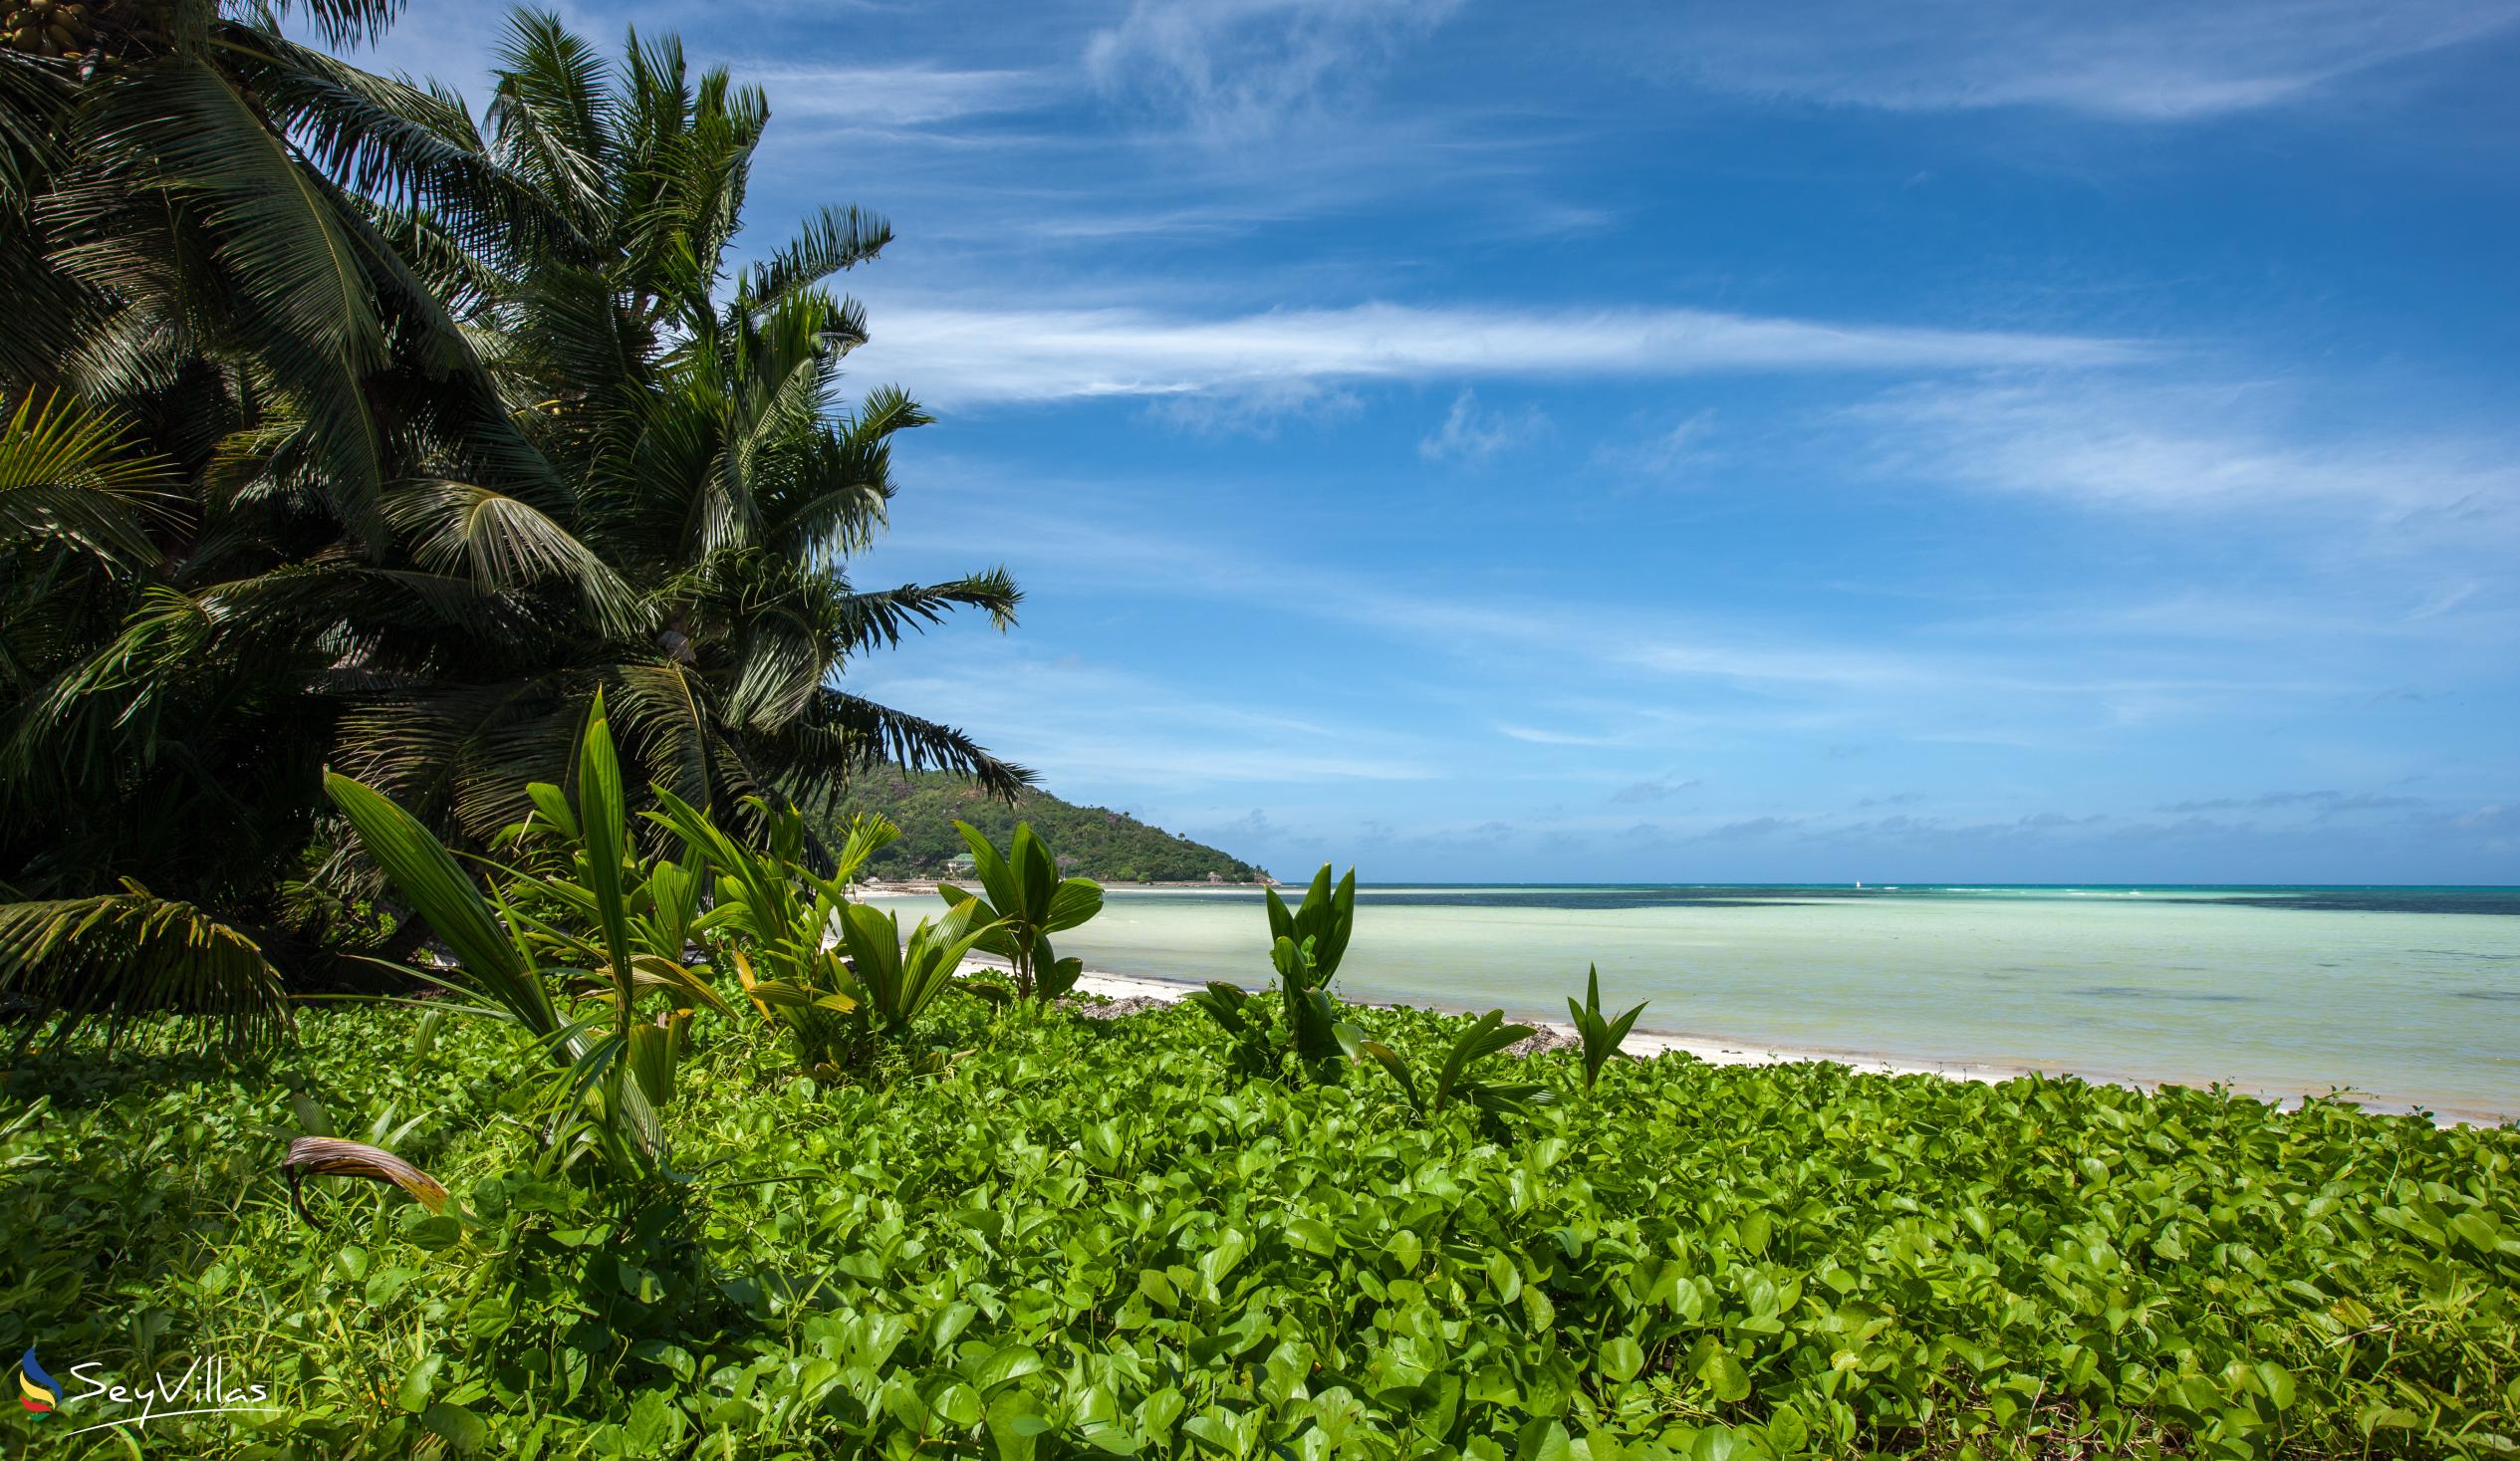 Foto 34: Destination Self-Catering - Plages - Praslin (Seychelles)